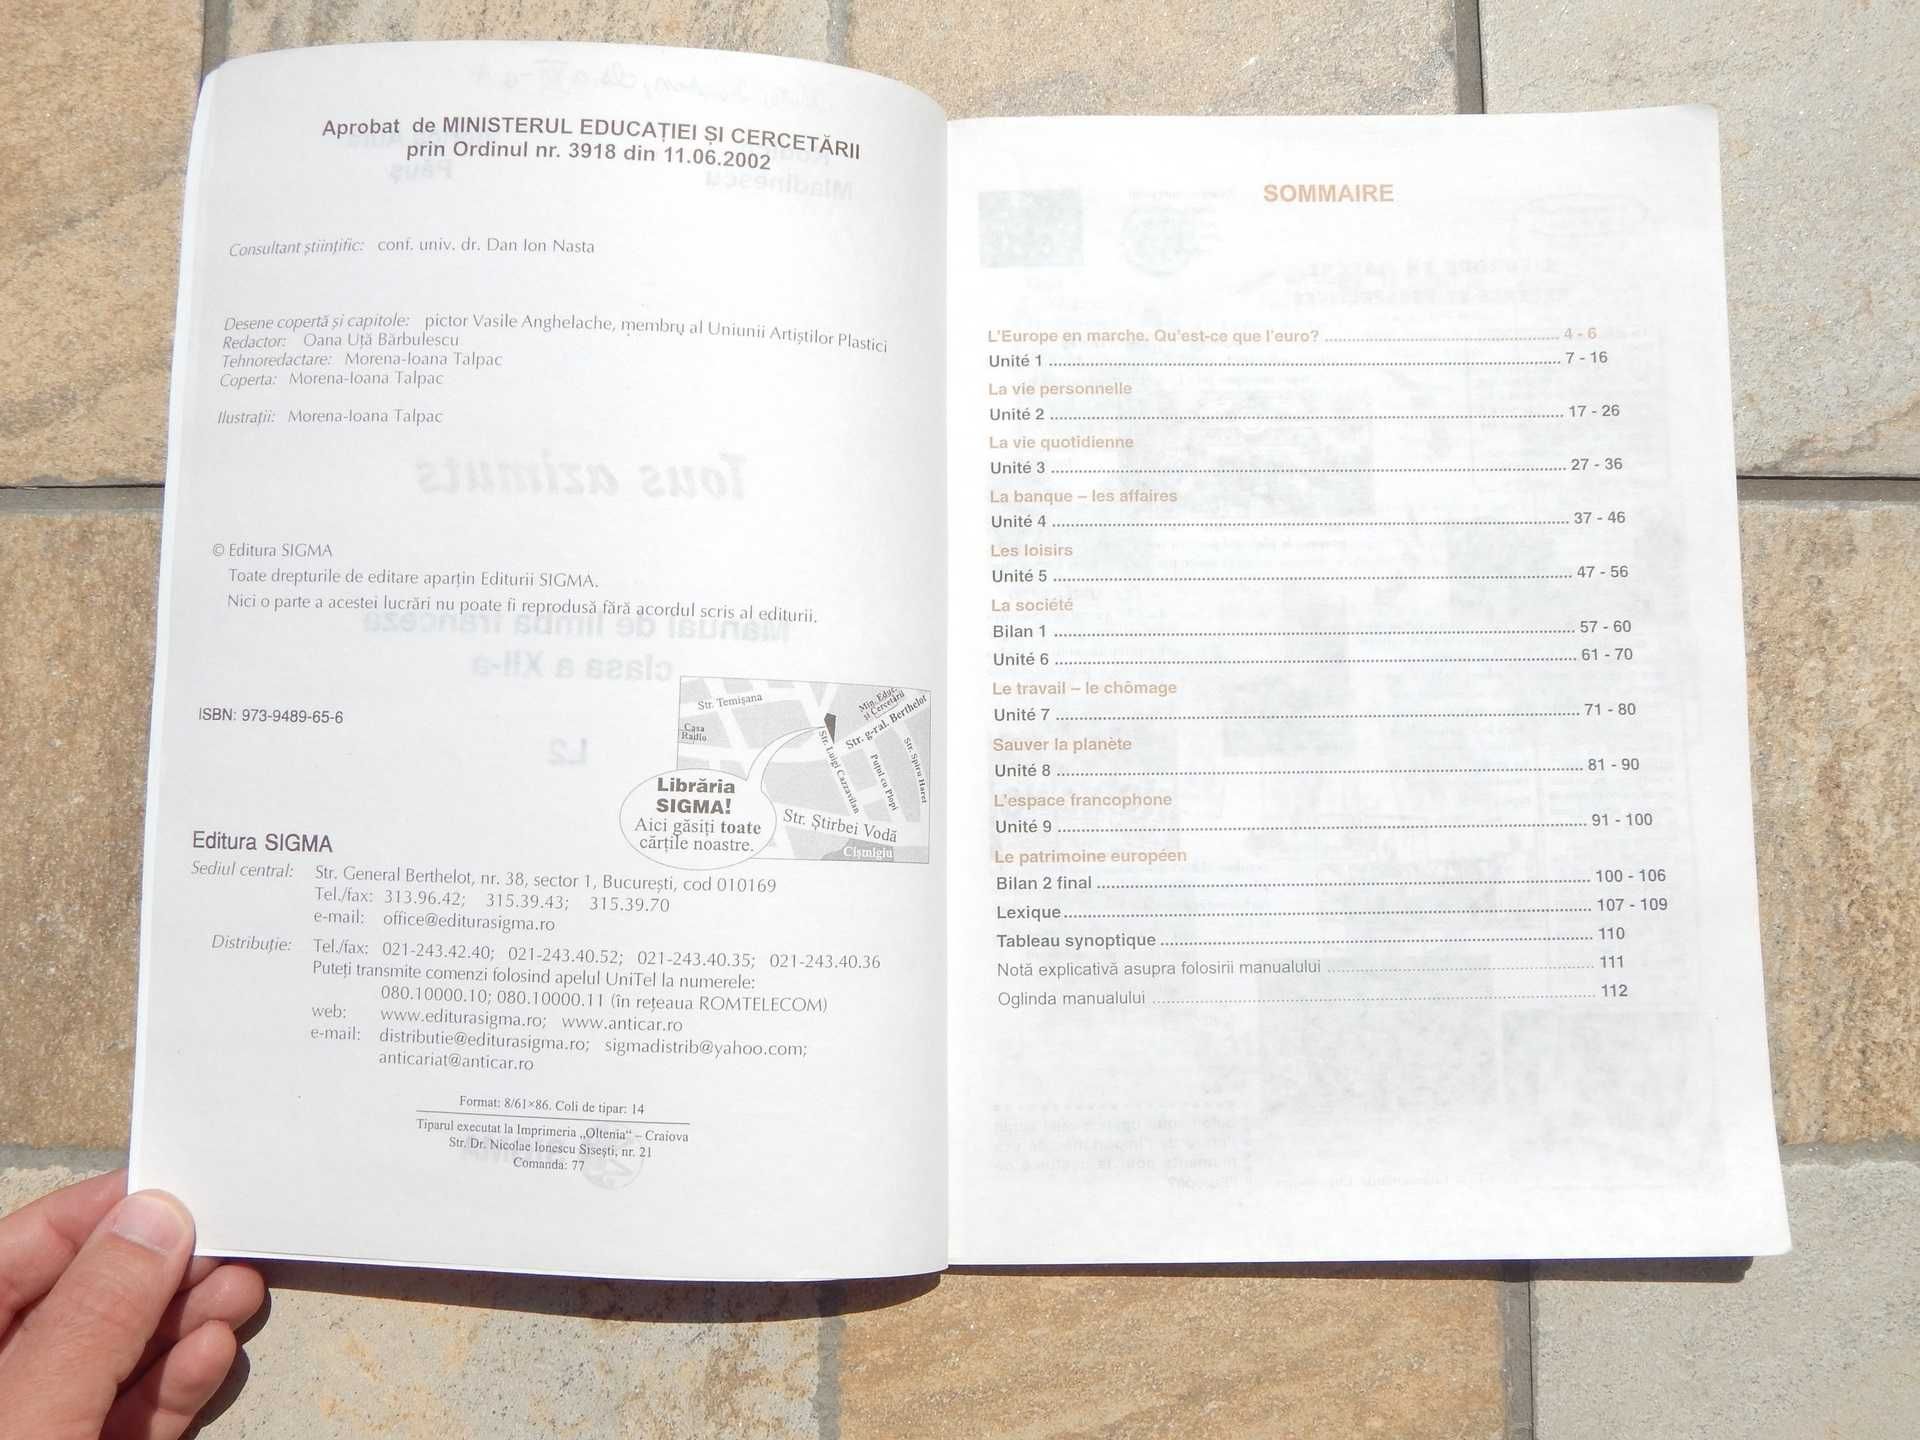 Manual limba franceza cls XII Tous azimuts - R Mladinescu V A Paus